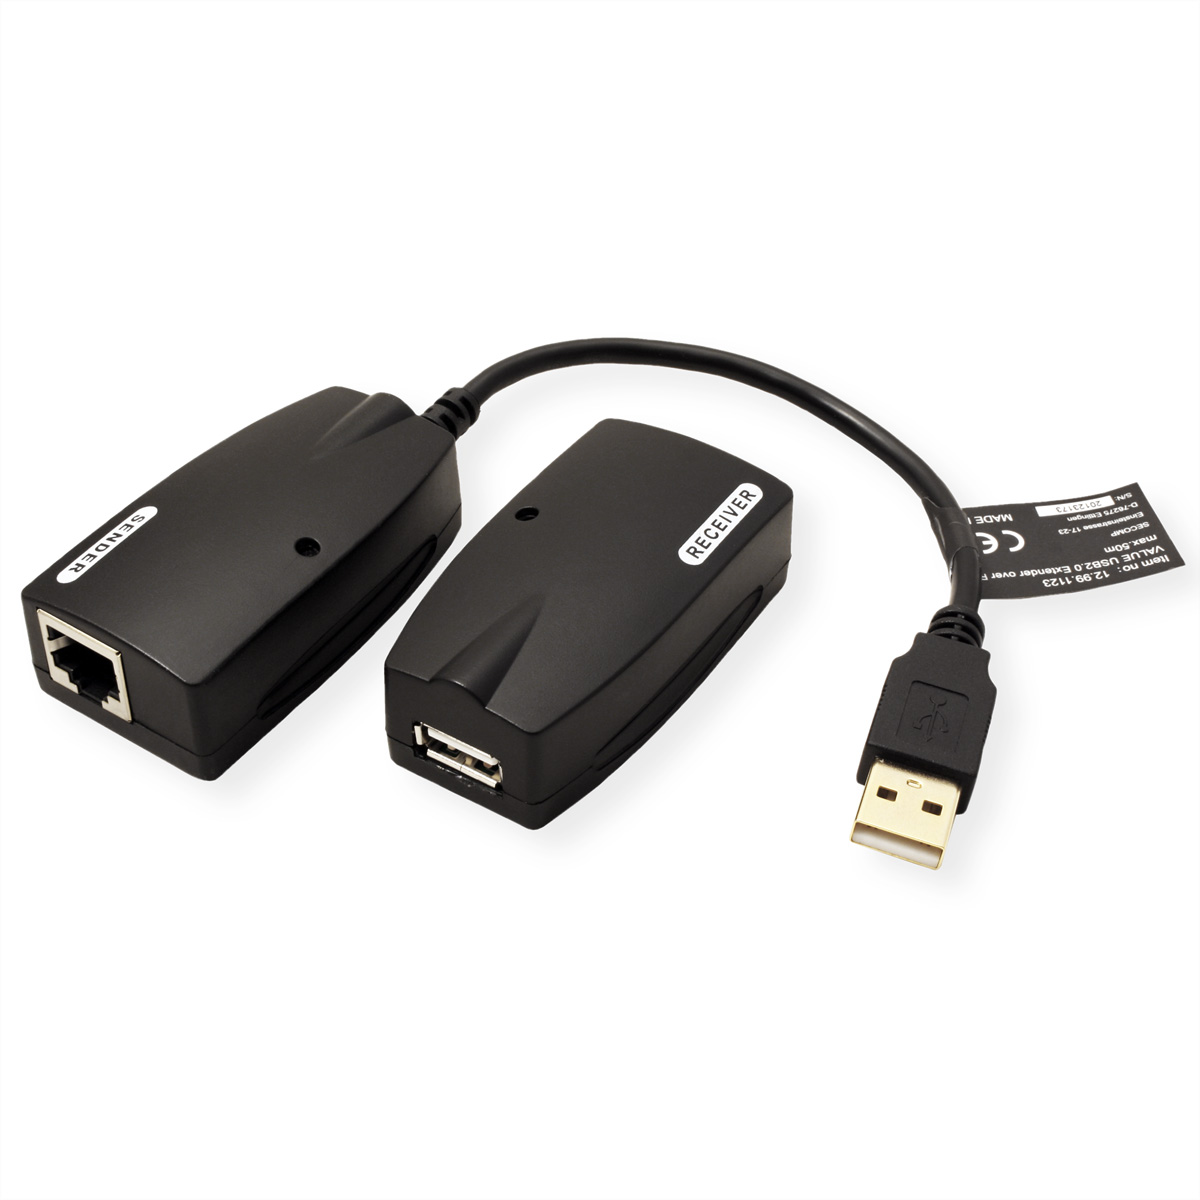 VALUE Verlängerung 2.0 RJ45, max. USB 50m über USB-Verlängerung